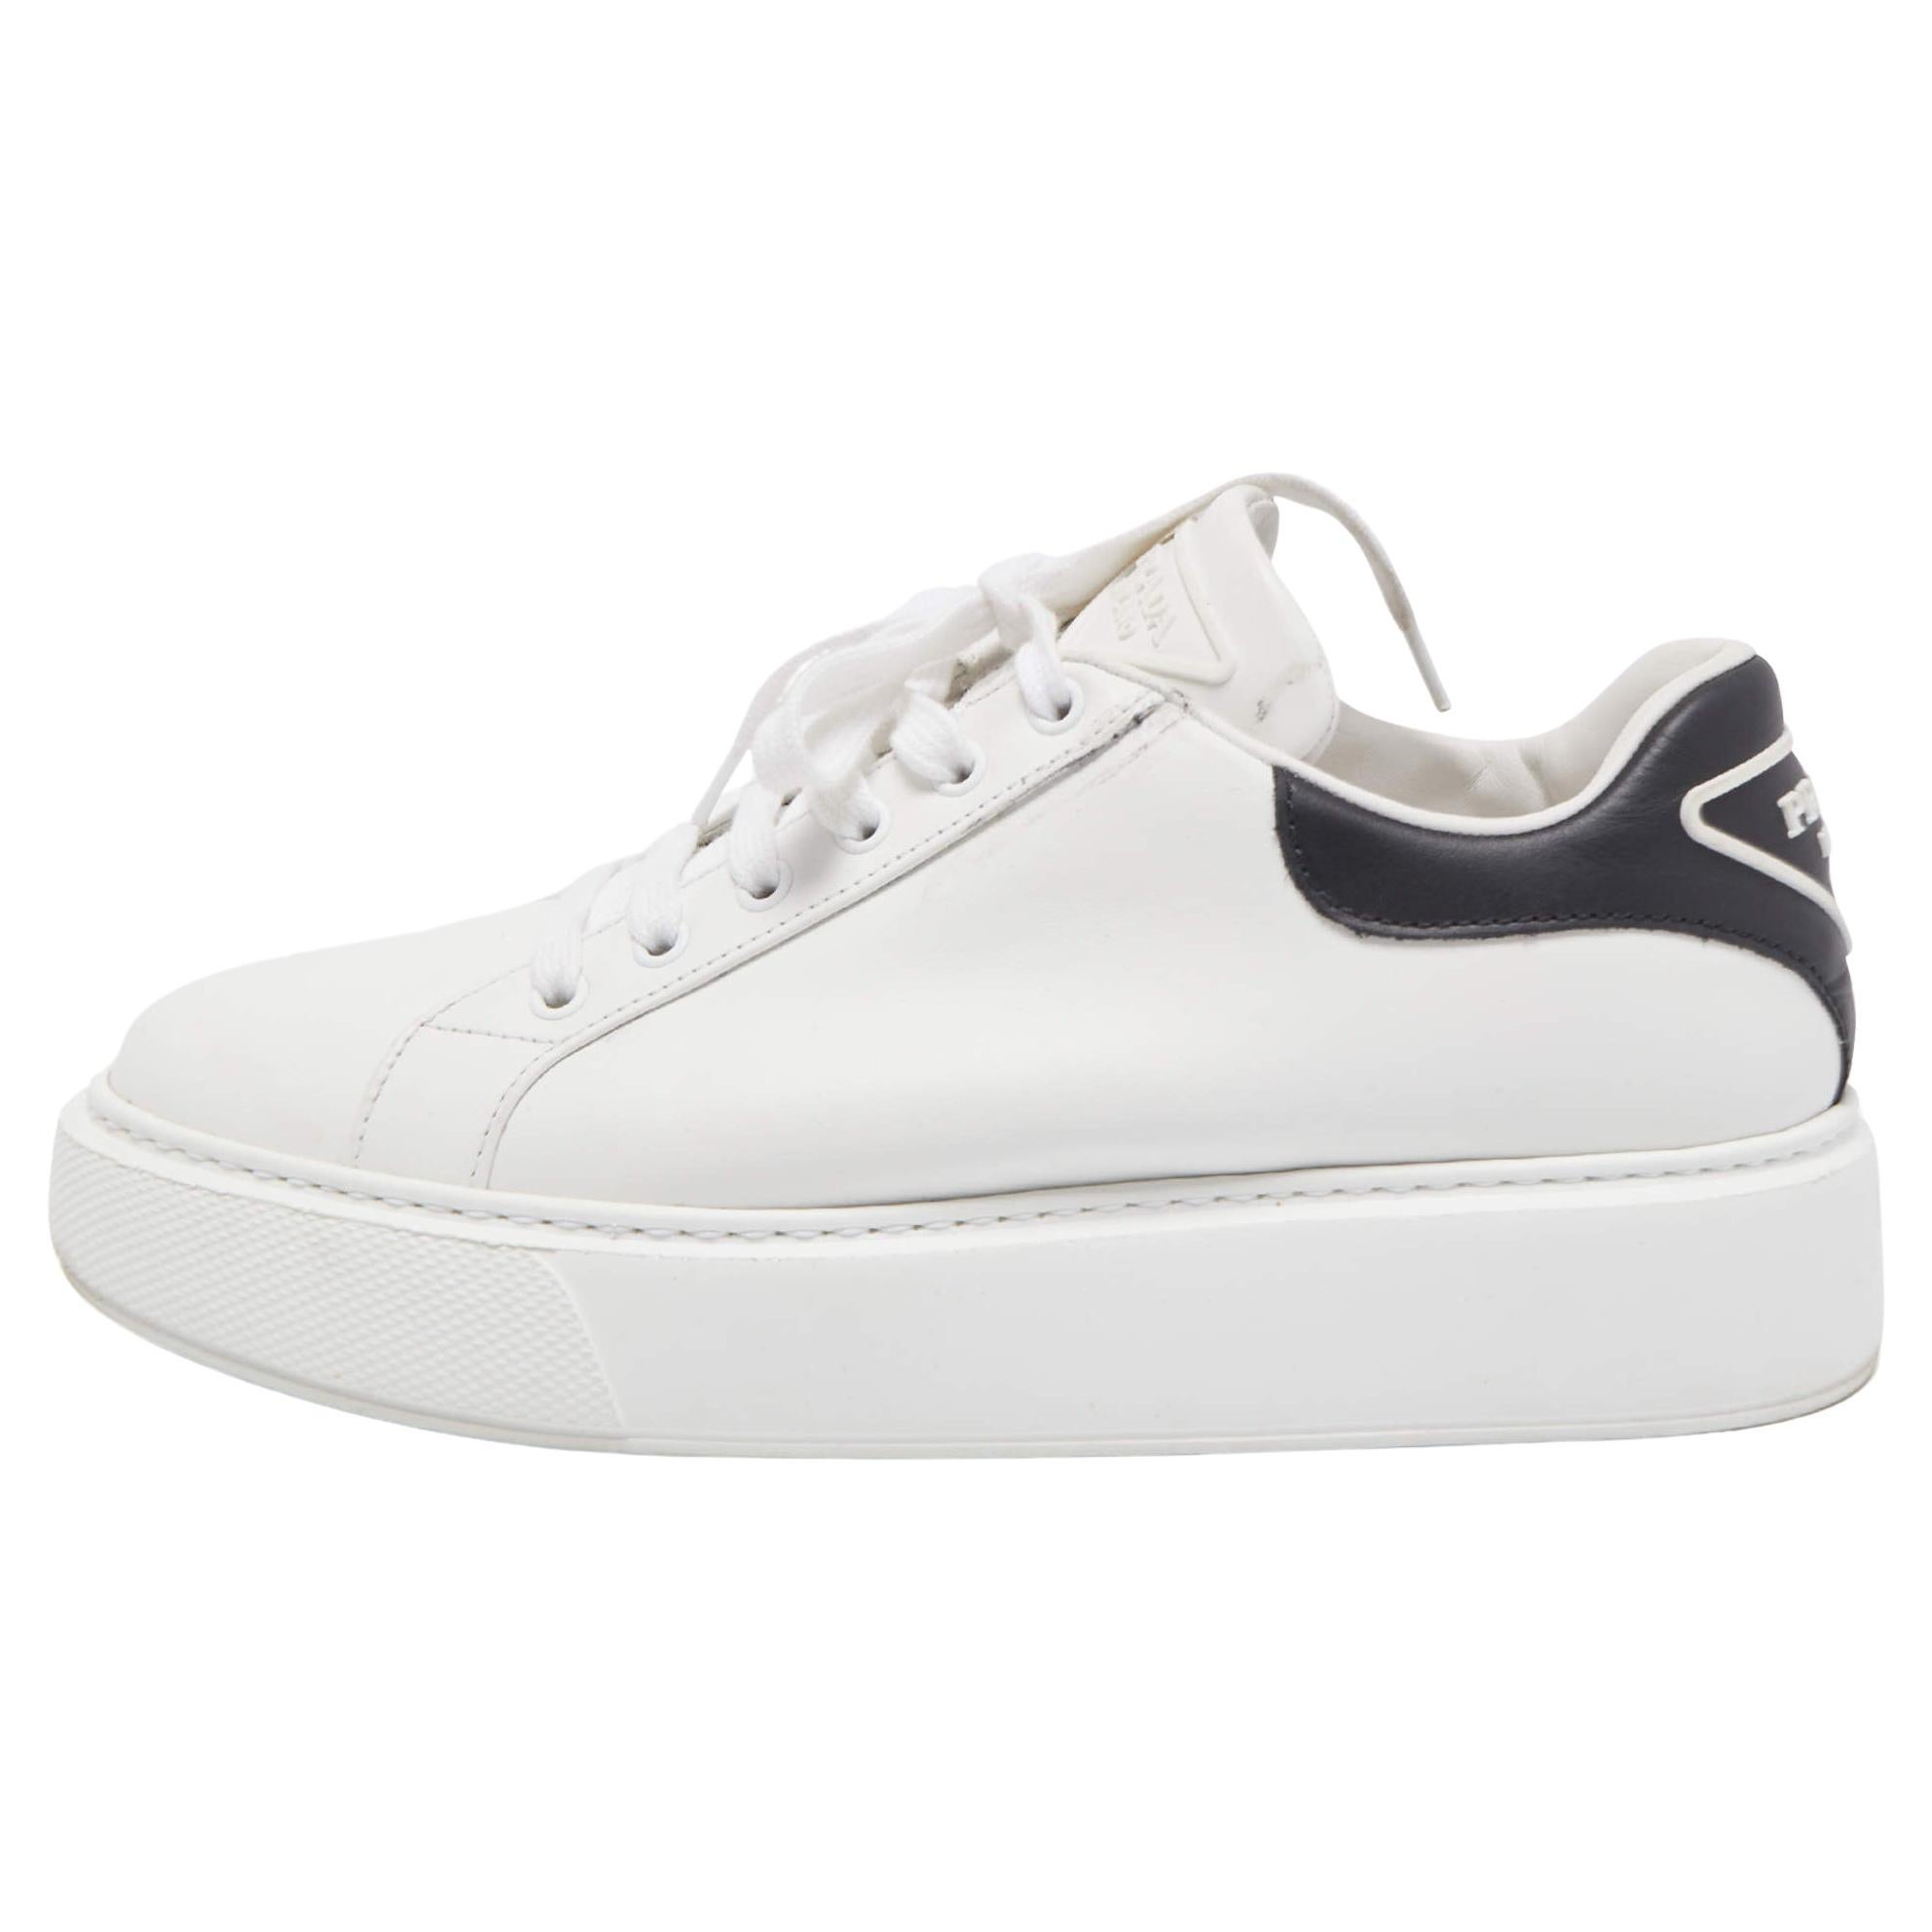 Prada White Leather Macro Low Top Sneakers Size 41